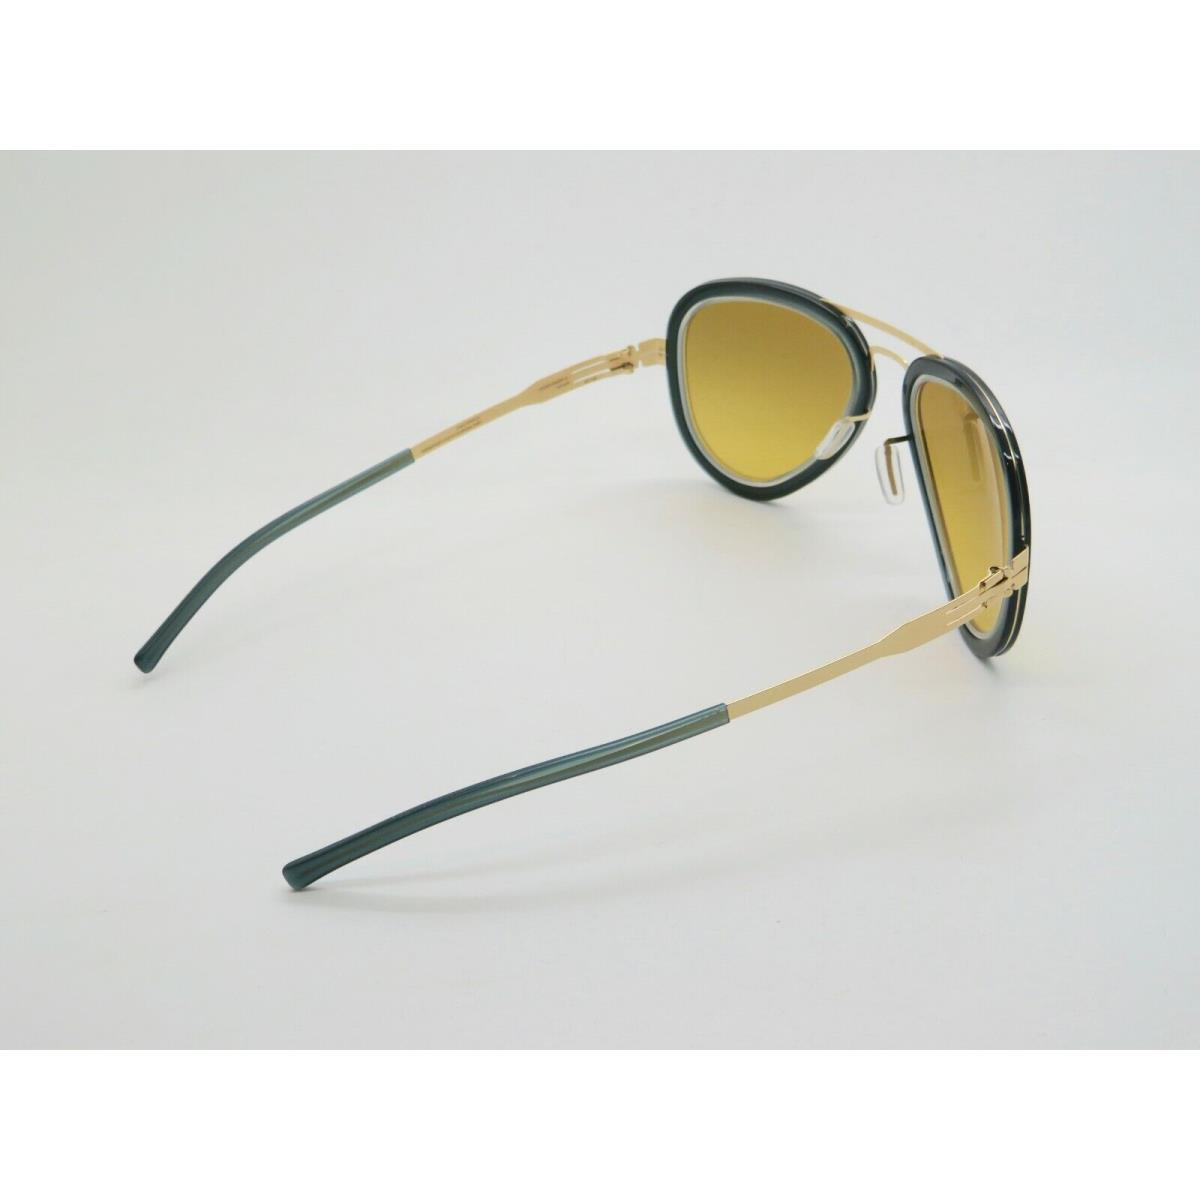 ic! berlin sunglasses Rinaldo - Frame: Matte Gold/Rocket Fuel, Lens: Yellow Dust Mirrored 1